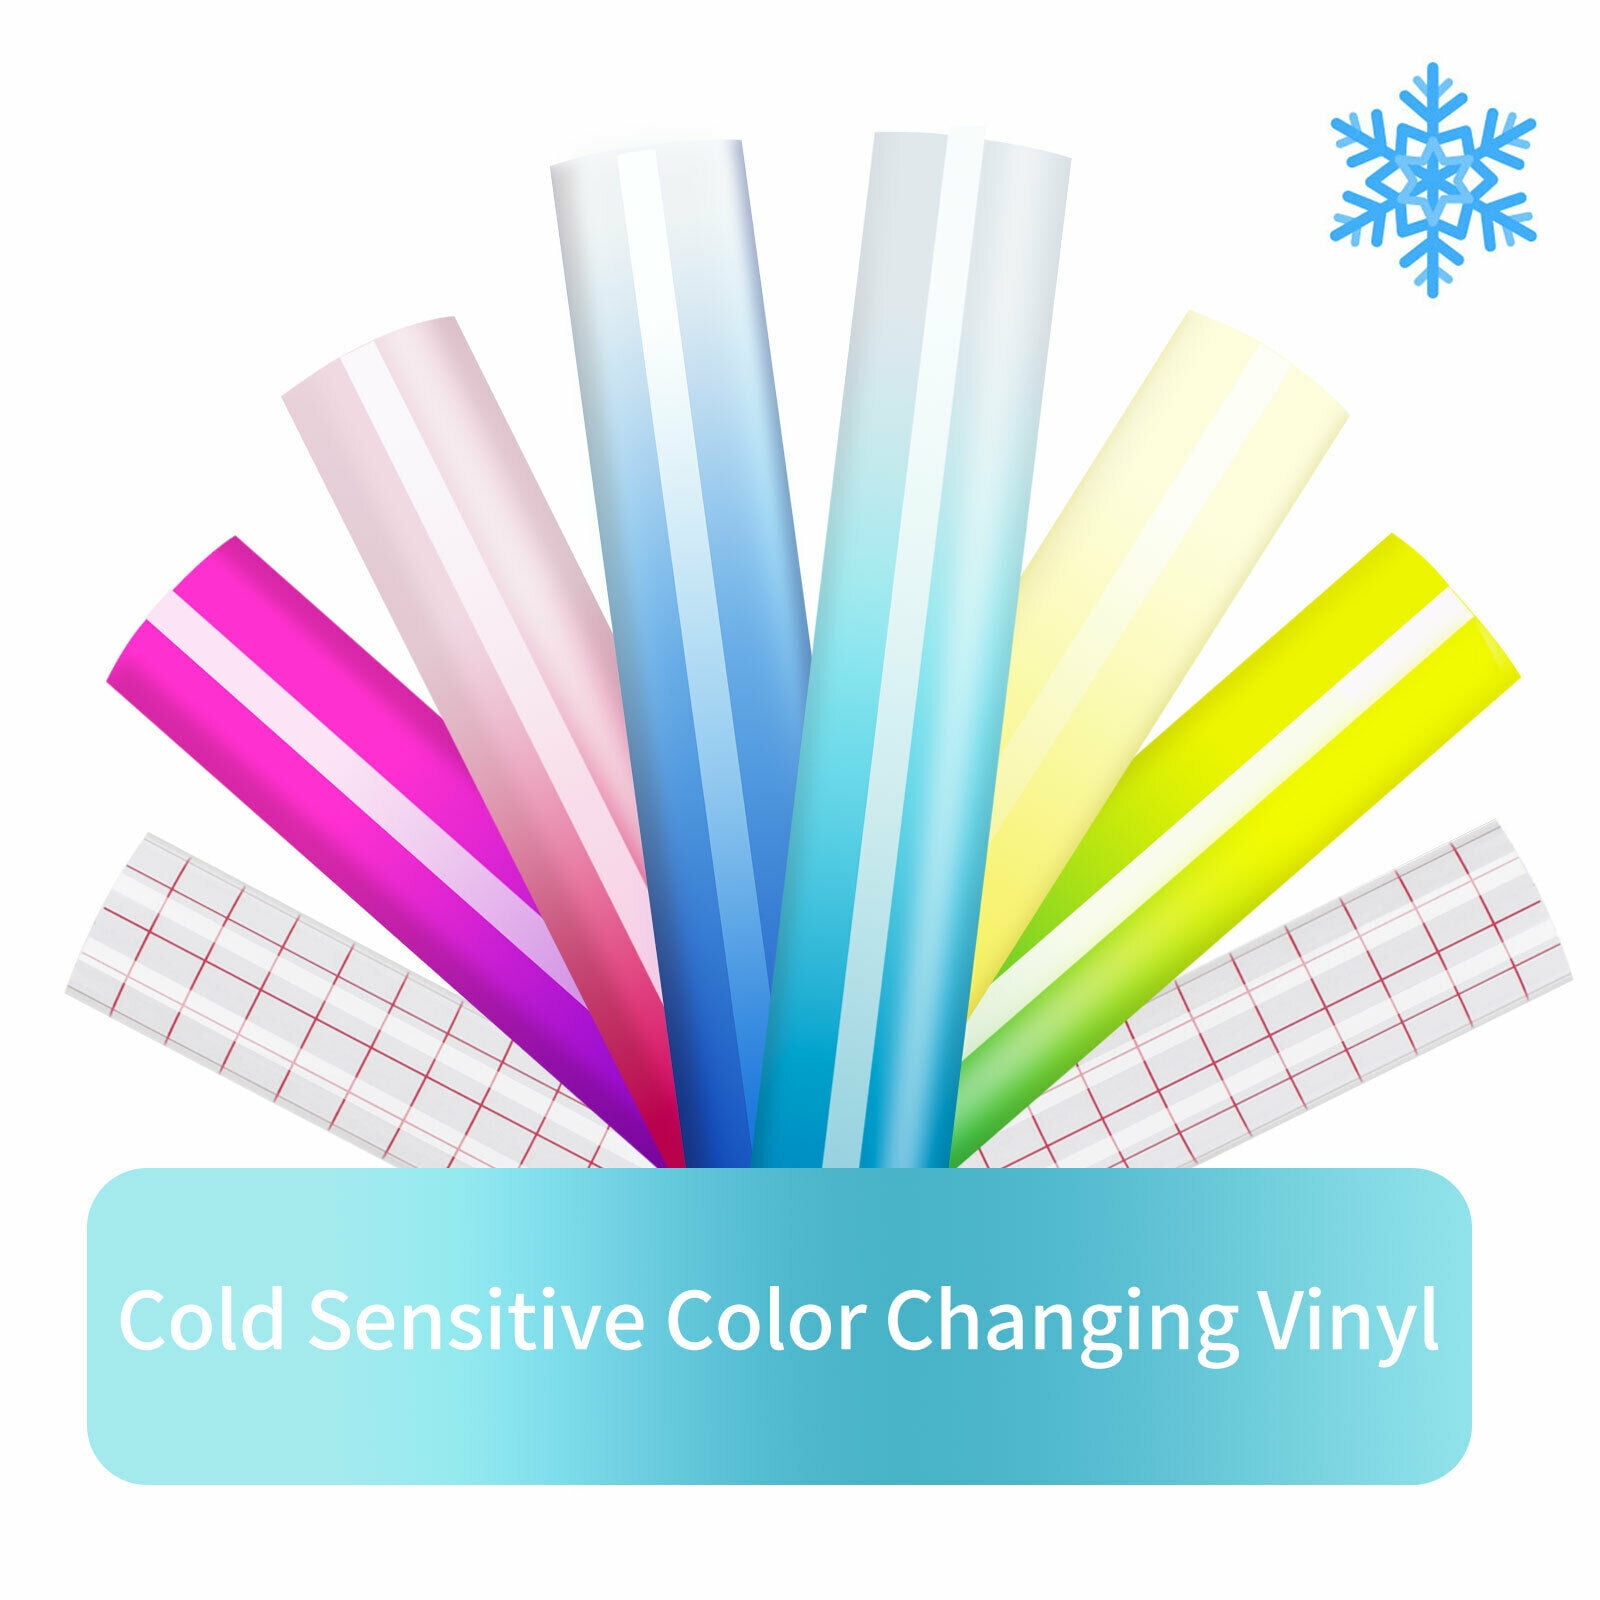 OFFNOVA Cold Color Changing Vinyl Permanent Adhesive Vinyl for Cricut, 3 Colors-12 x 12 Vinyl Sheets +2 Transfer Tape Sheets Sensitive to Cold